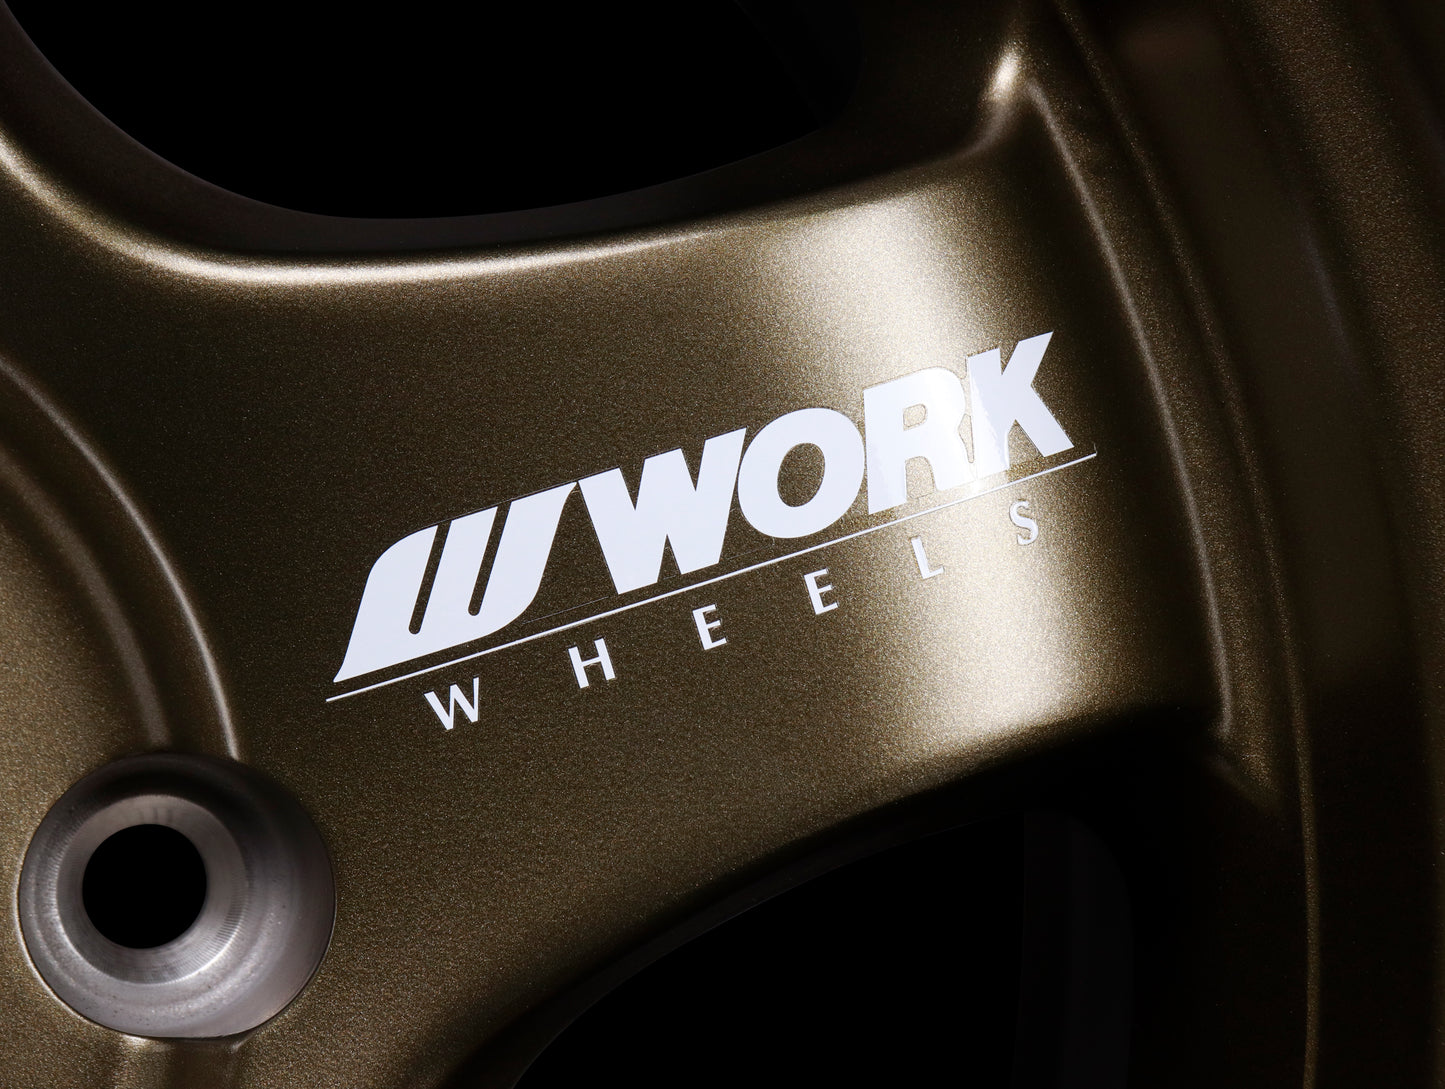 Work XTRAP S1HC Wheels - Matte Bronze - 17x8.5 / -10 / 6x139.7